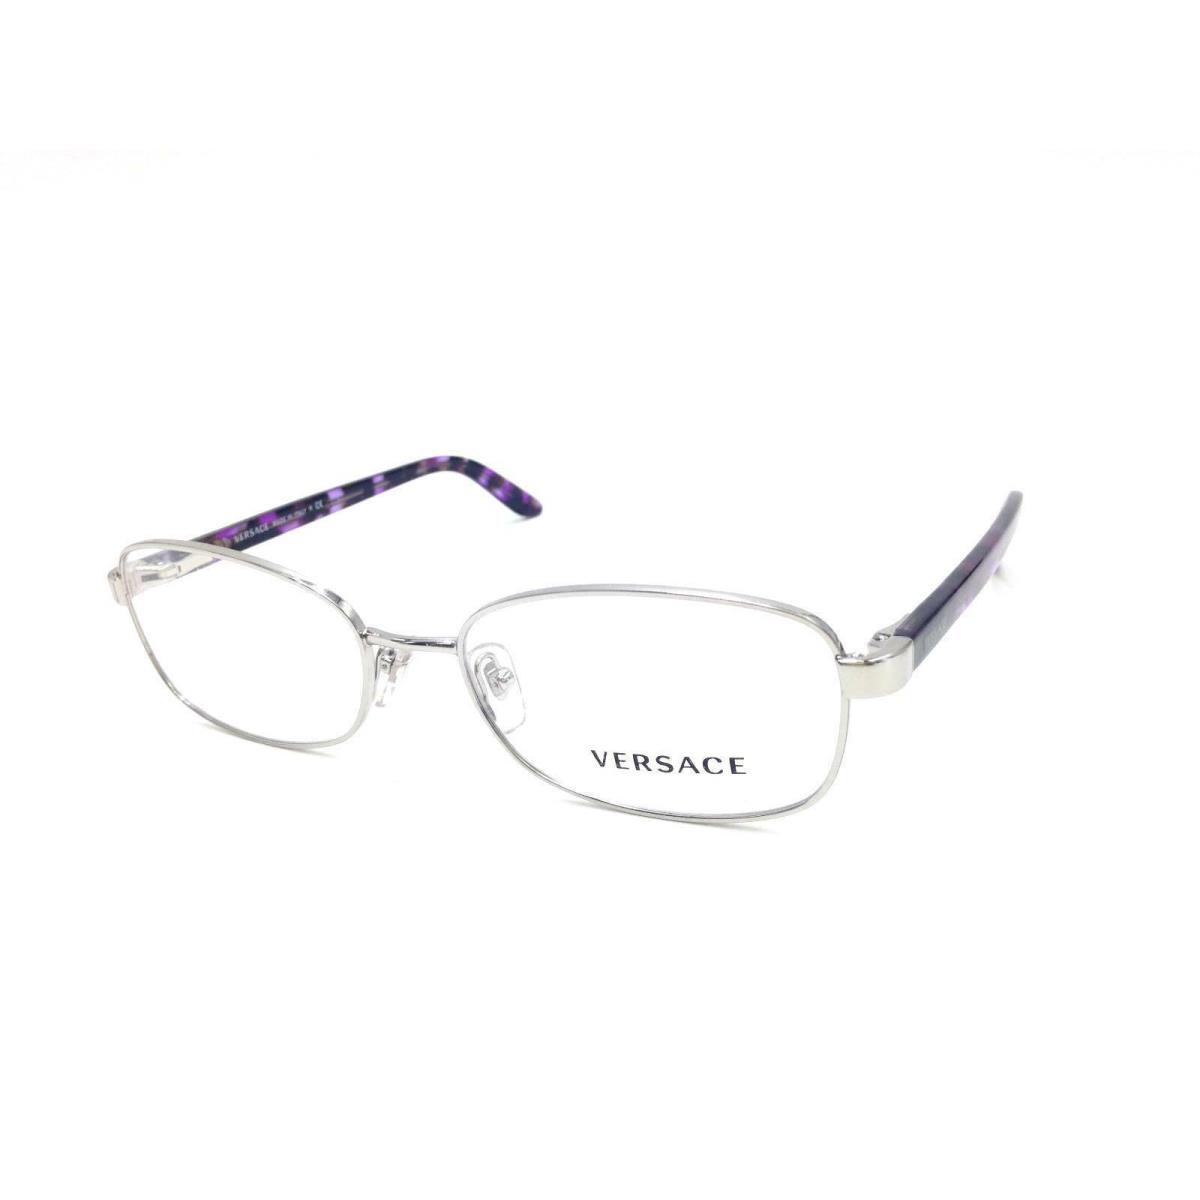 Versace Mod. 1213 Silver Purple 1000 Metal Eyeglasses Frames 53-17-135 Italy RX - Purple, Frame: Silver, Lens: